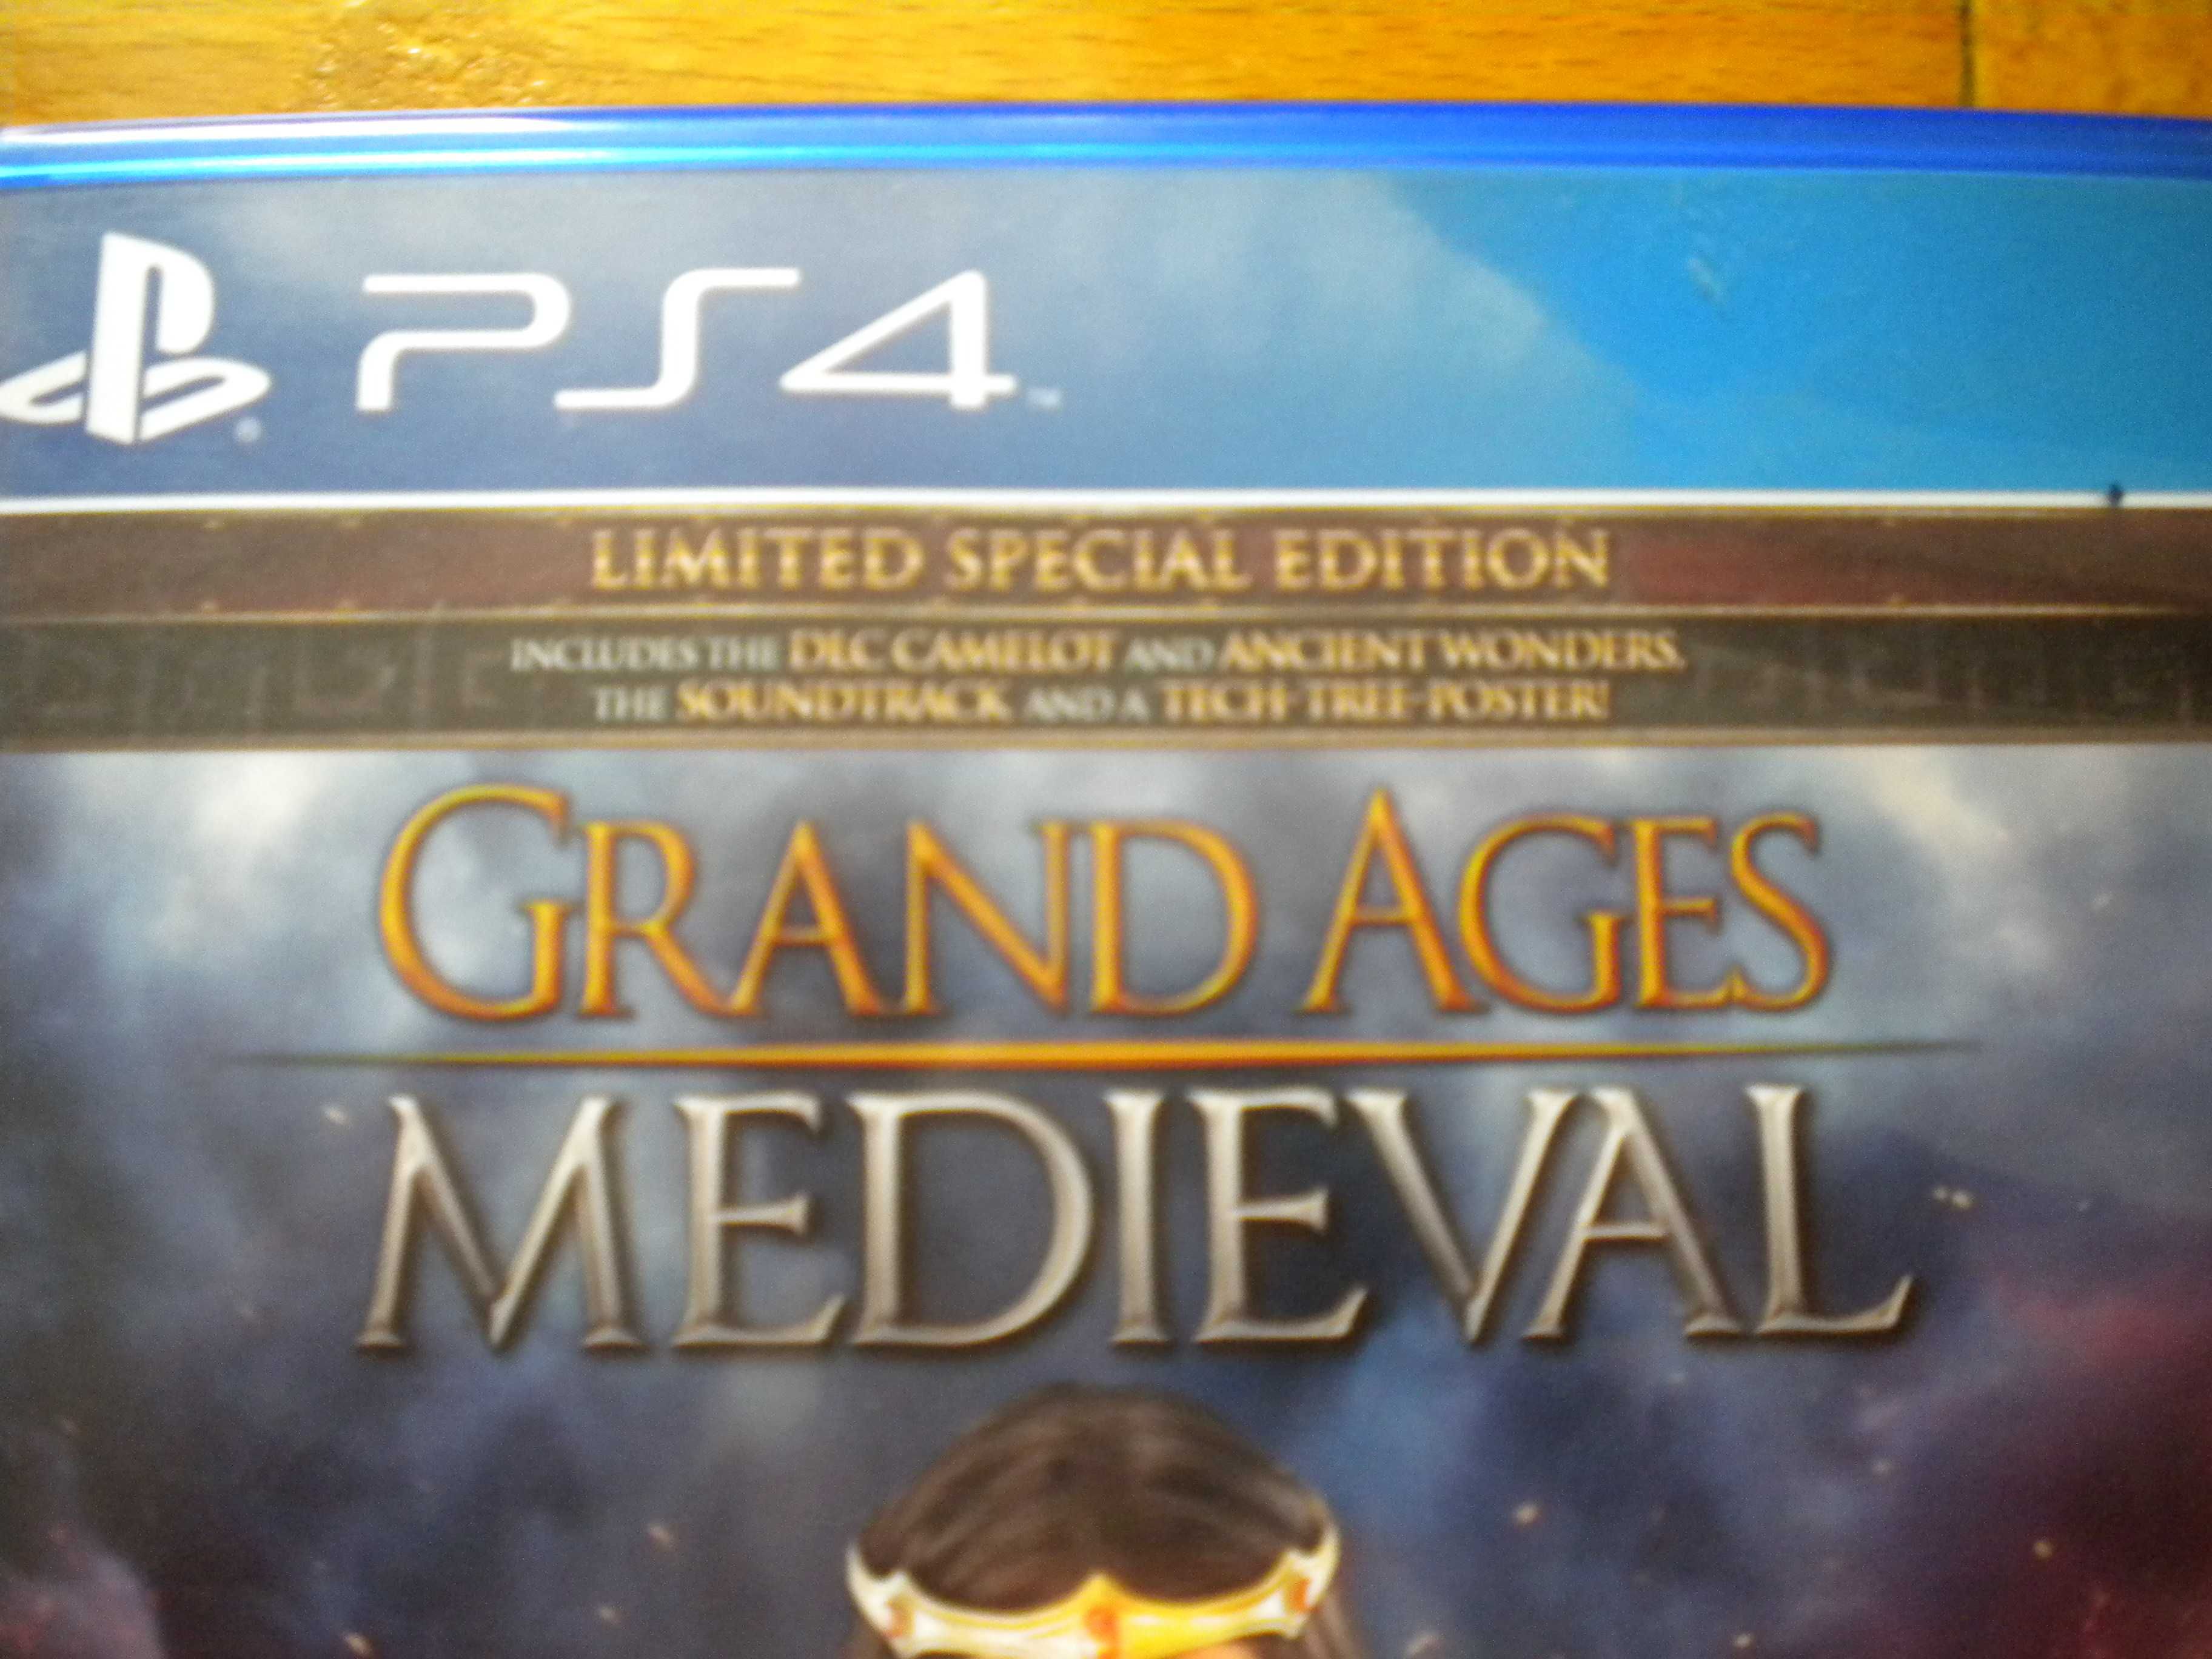 Grand Ages Medieval PS4 + dlc Camelot+ dlc Ancient Wonders+mini manual